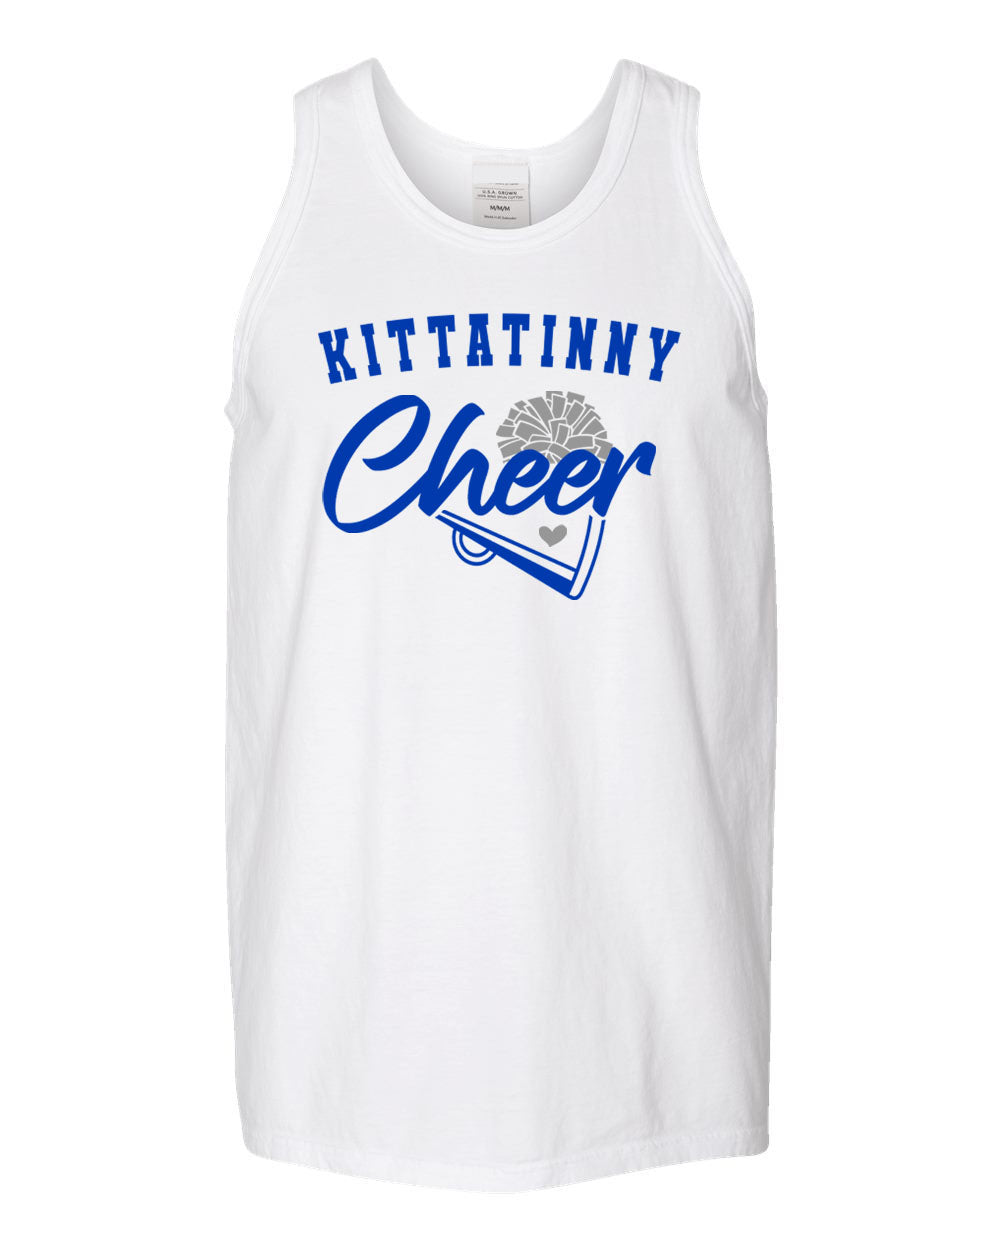 Kittatinny Cheer design 9 Muscle Tank Top